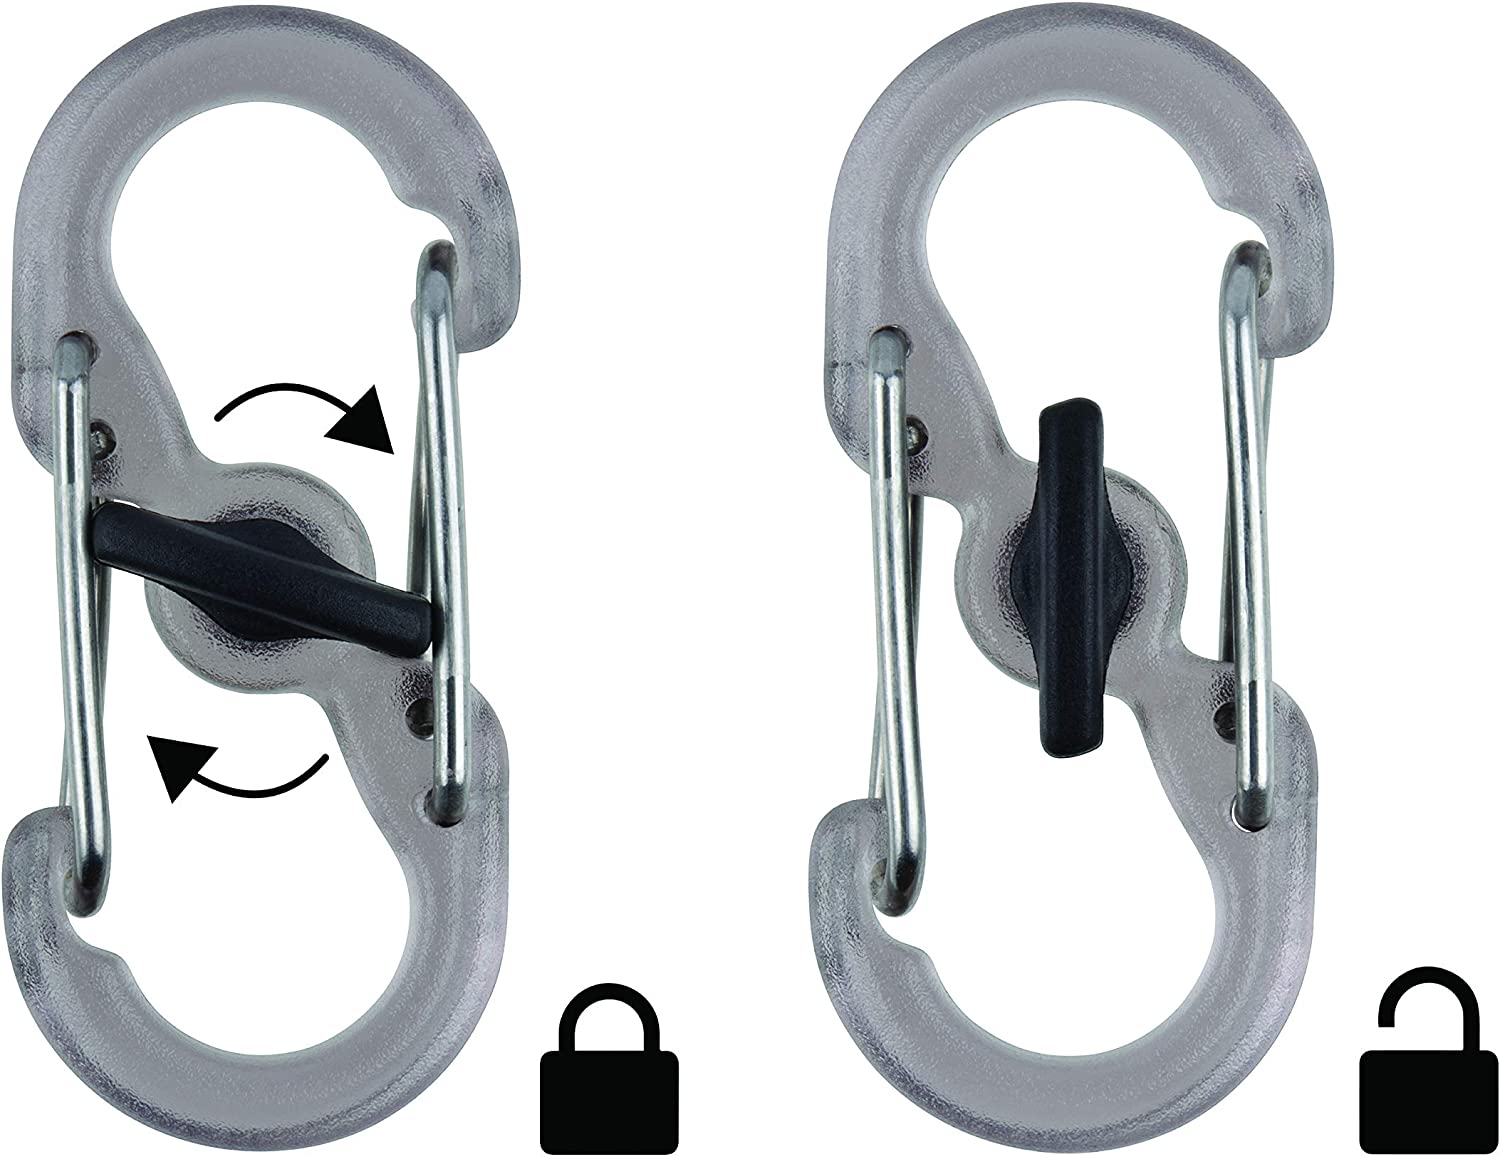 Маркеры для ключей с карабинами Nite Ize IdentiKey KIDC-M1-4R7 - фото